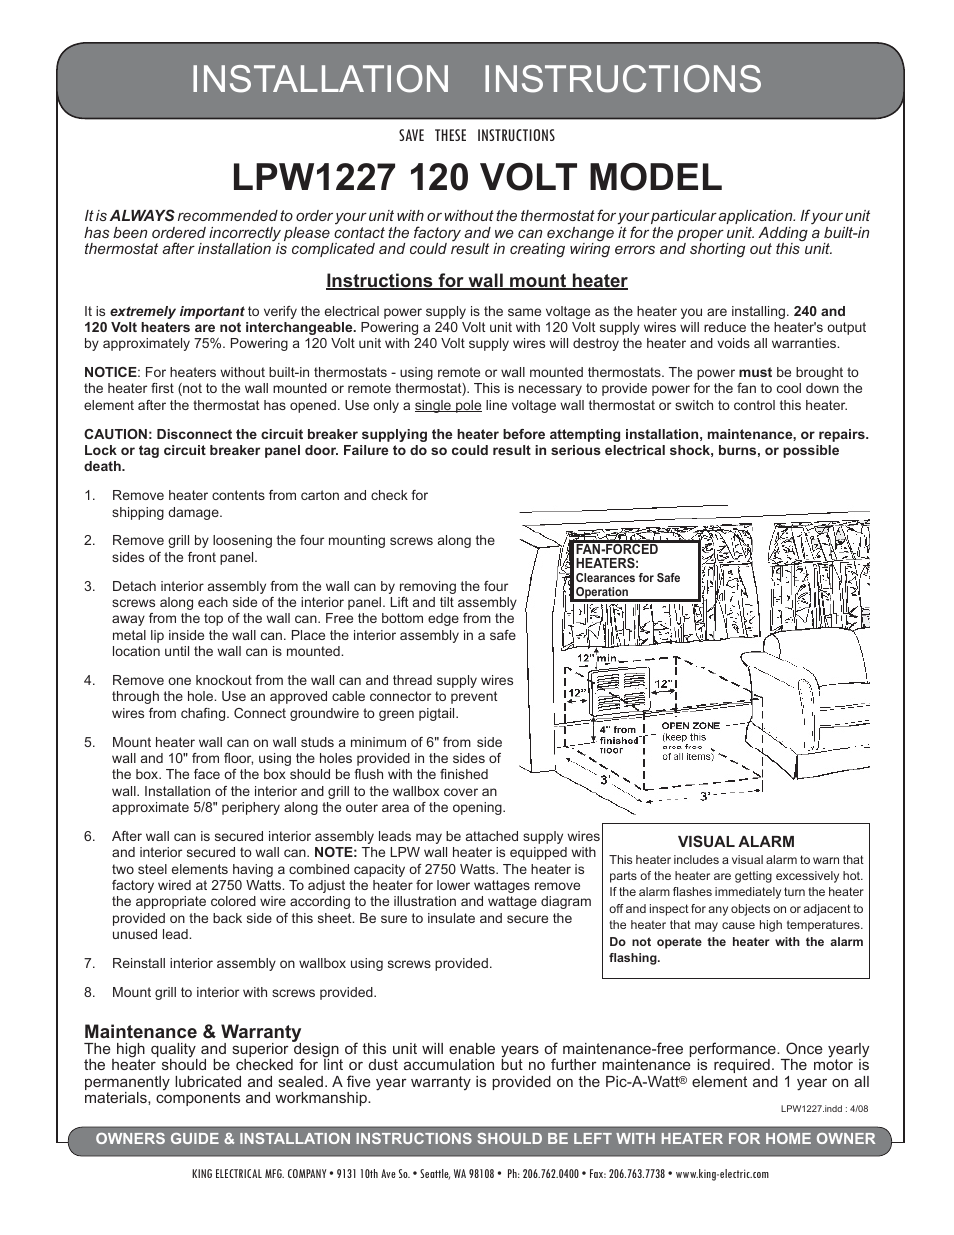 Model LPW